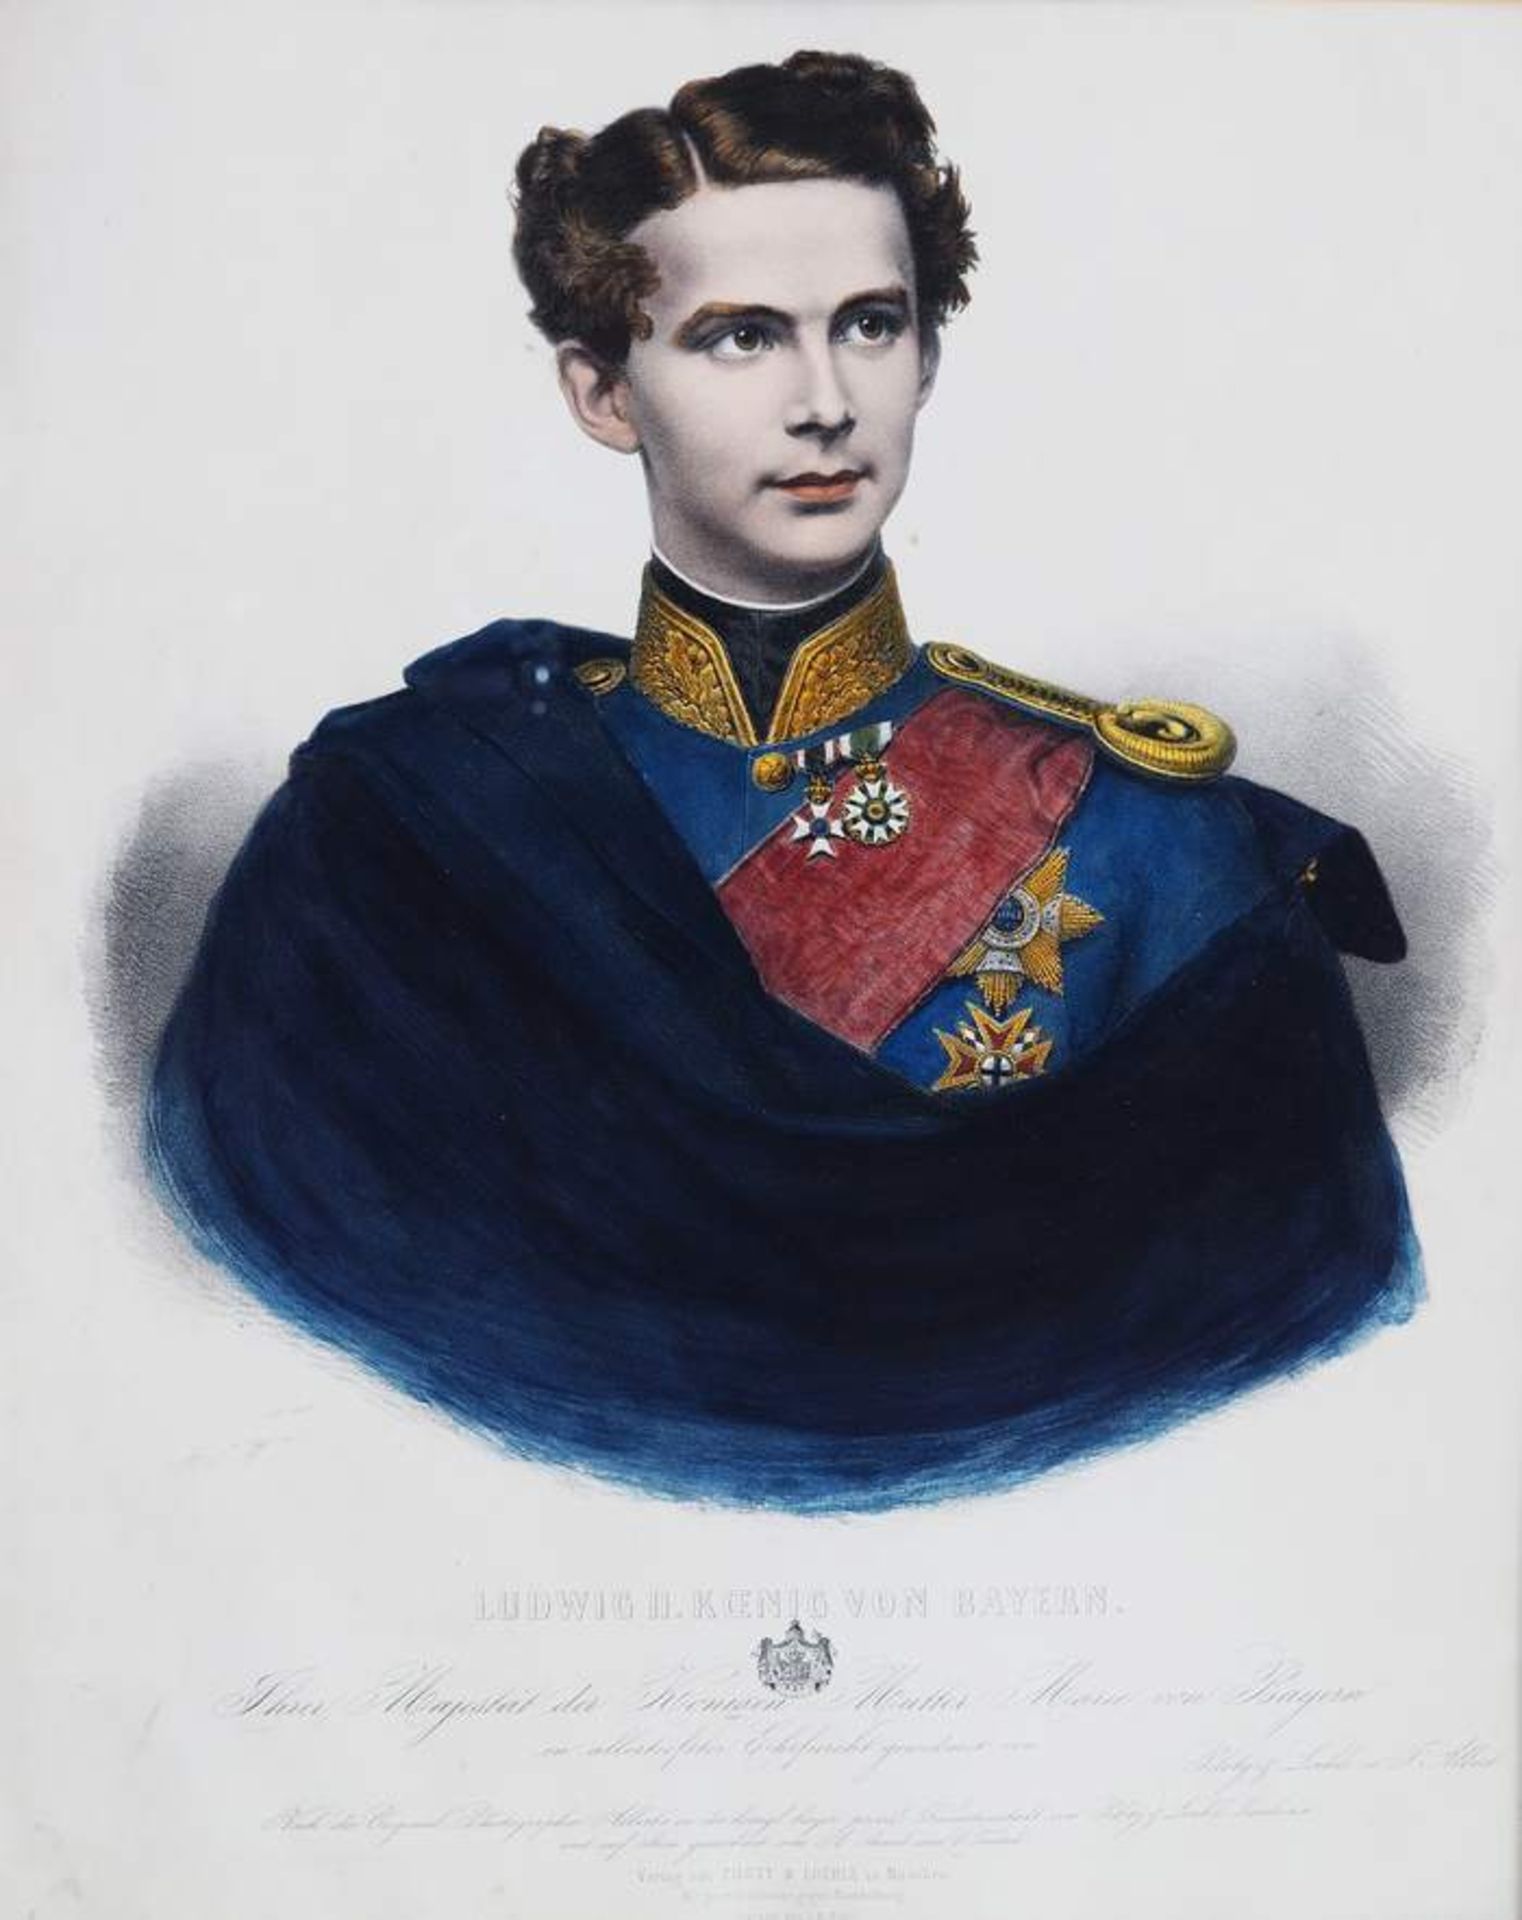 Brustbildnis König Ludwig II von Bayern. Brustbildnis König Ludwig II von Bayern. Farblithografie